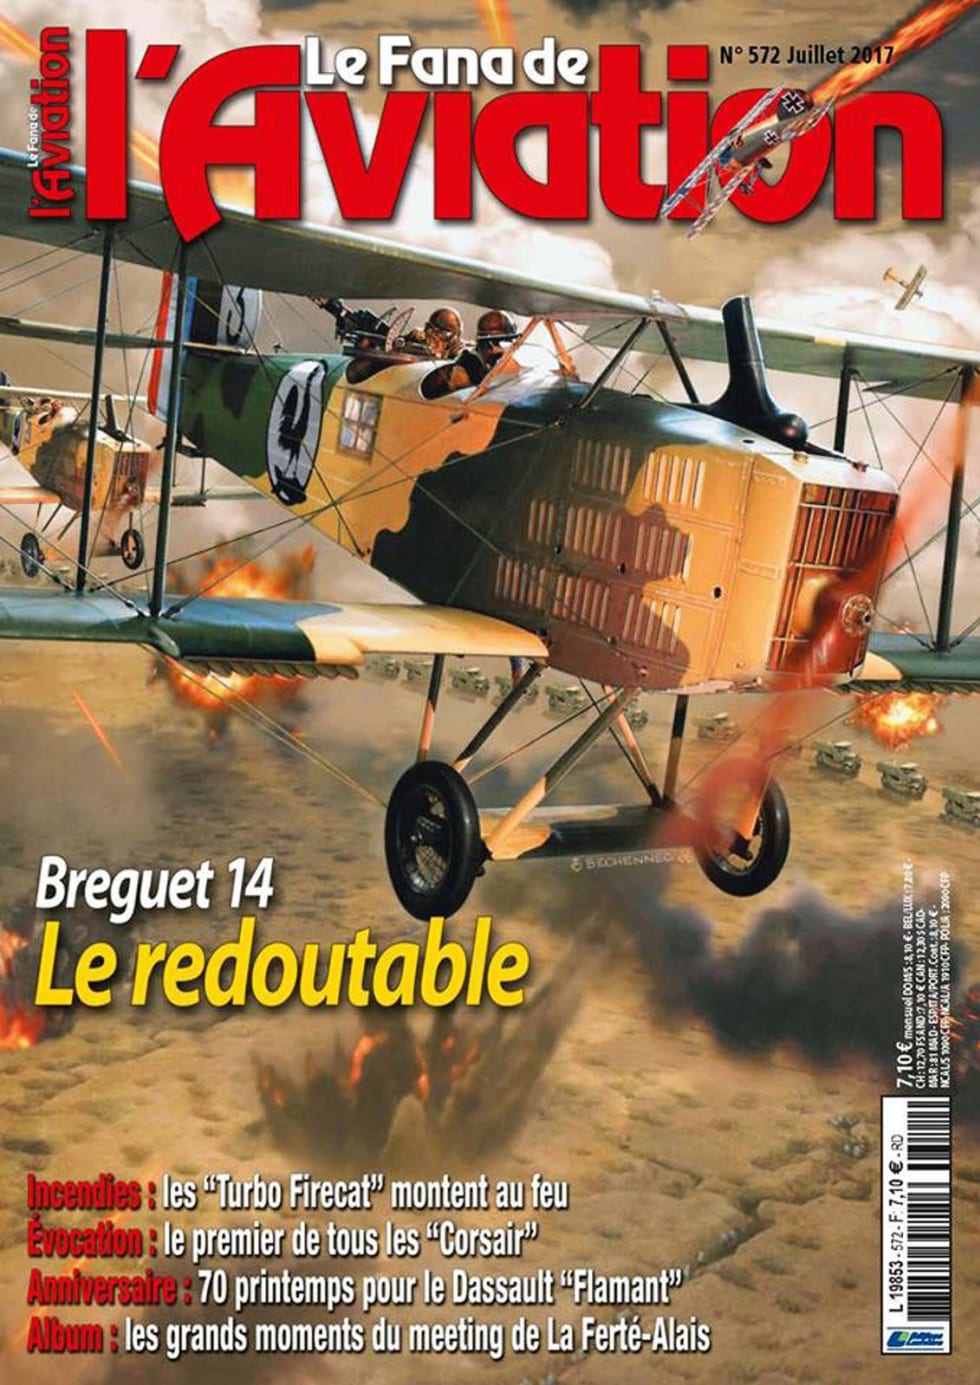 Le Fana de l'Aviation Issue 572